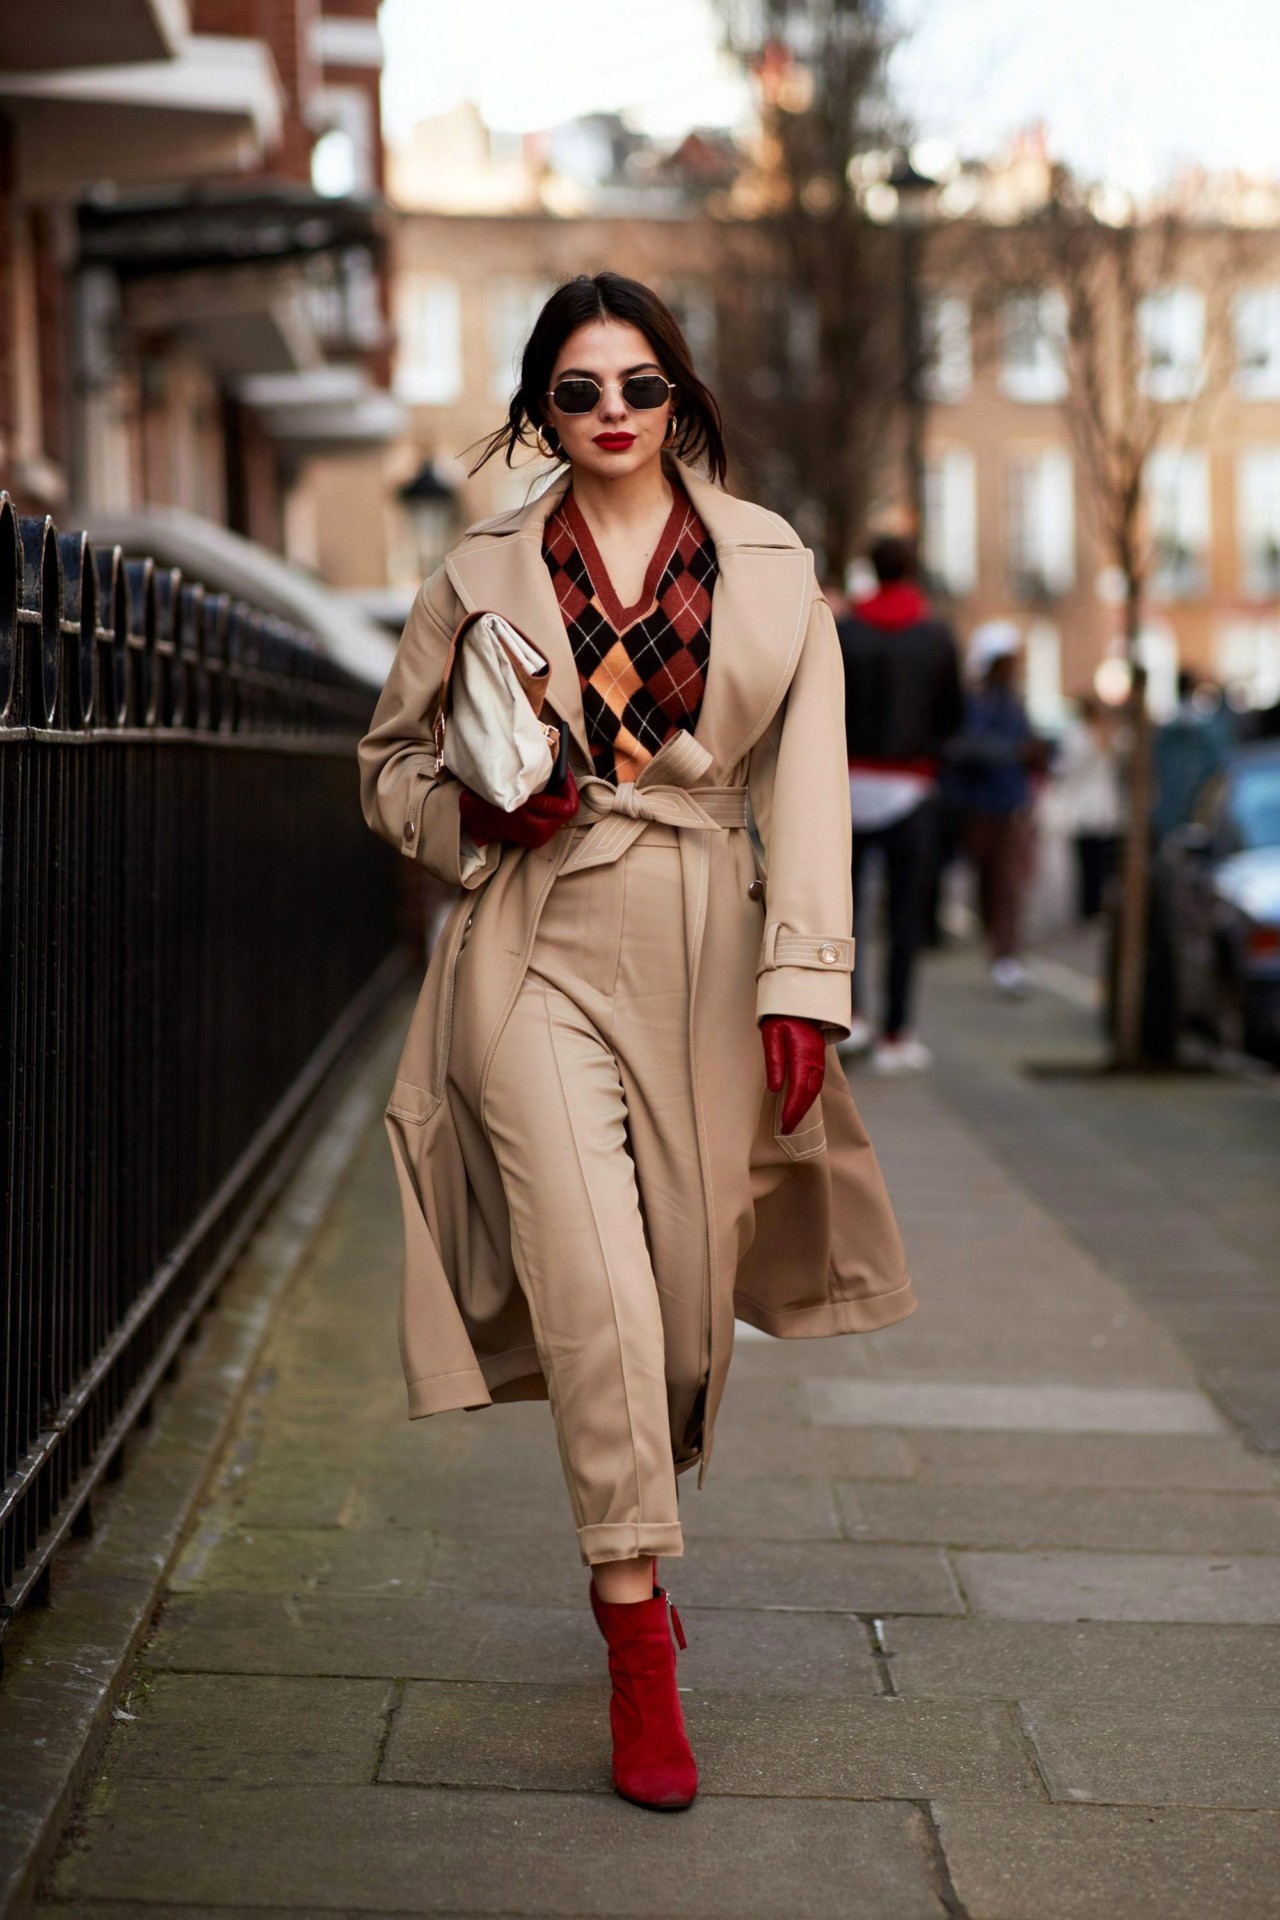 42 Impressive Fall Street Style Fashion For Women 2021 - Vashionable